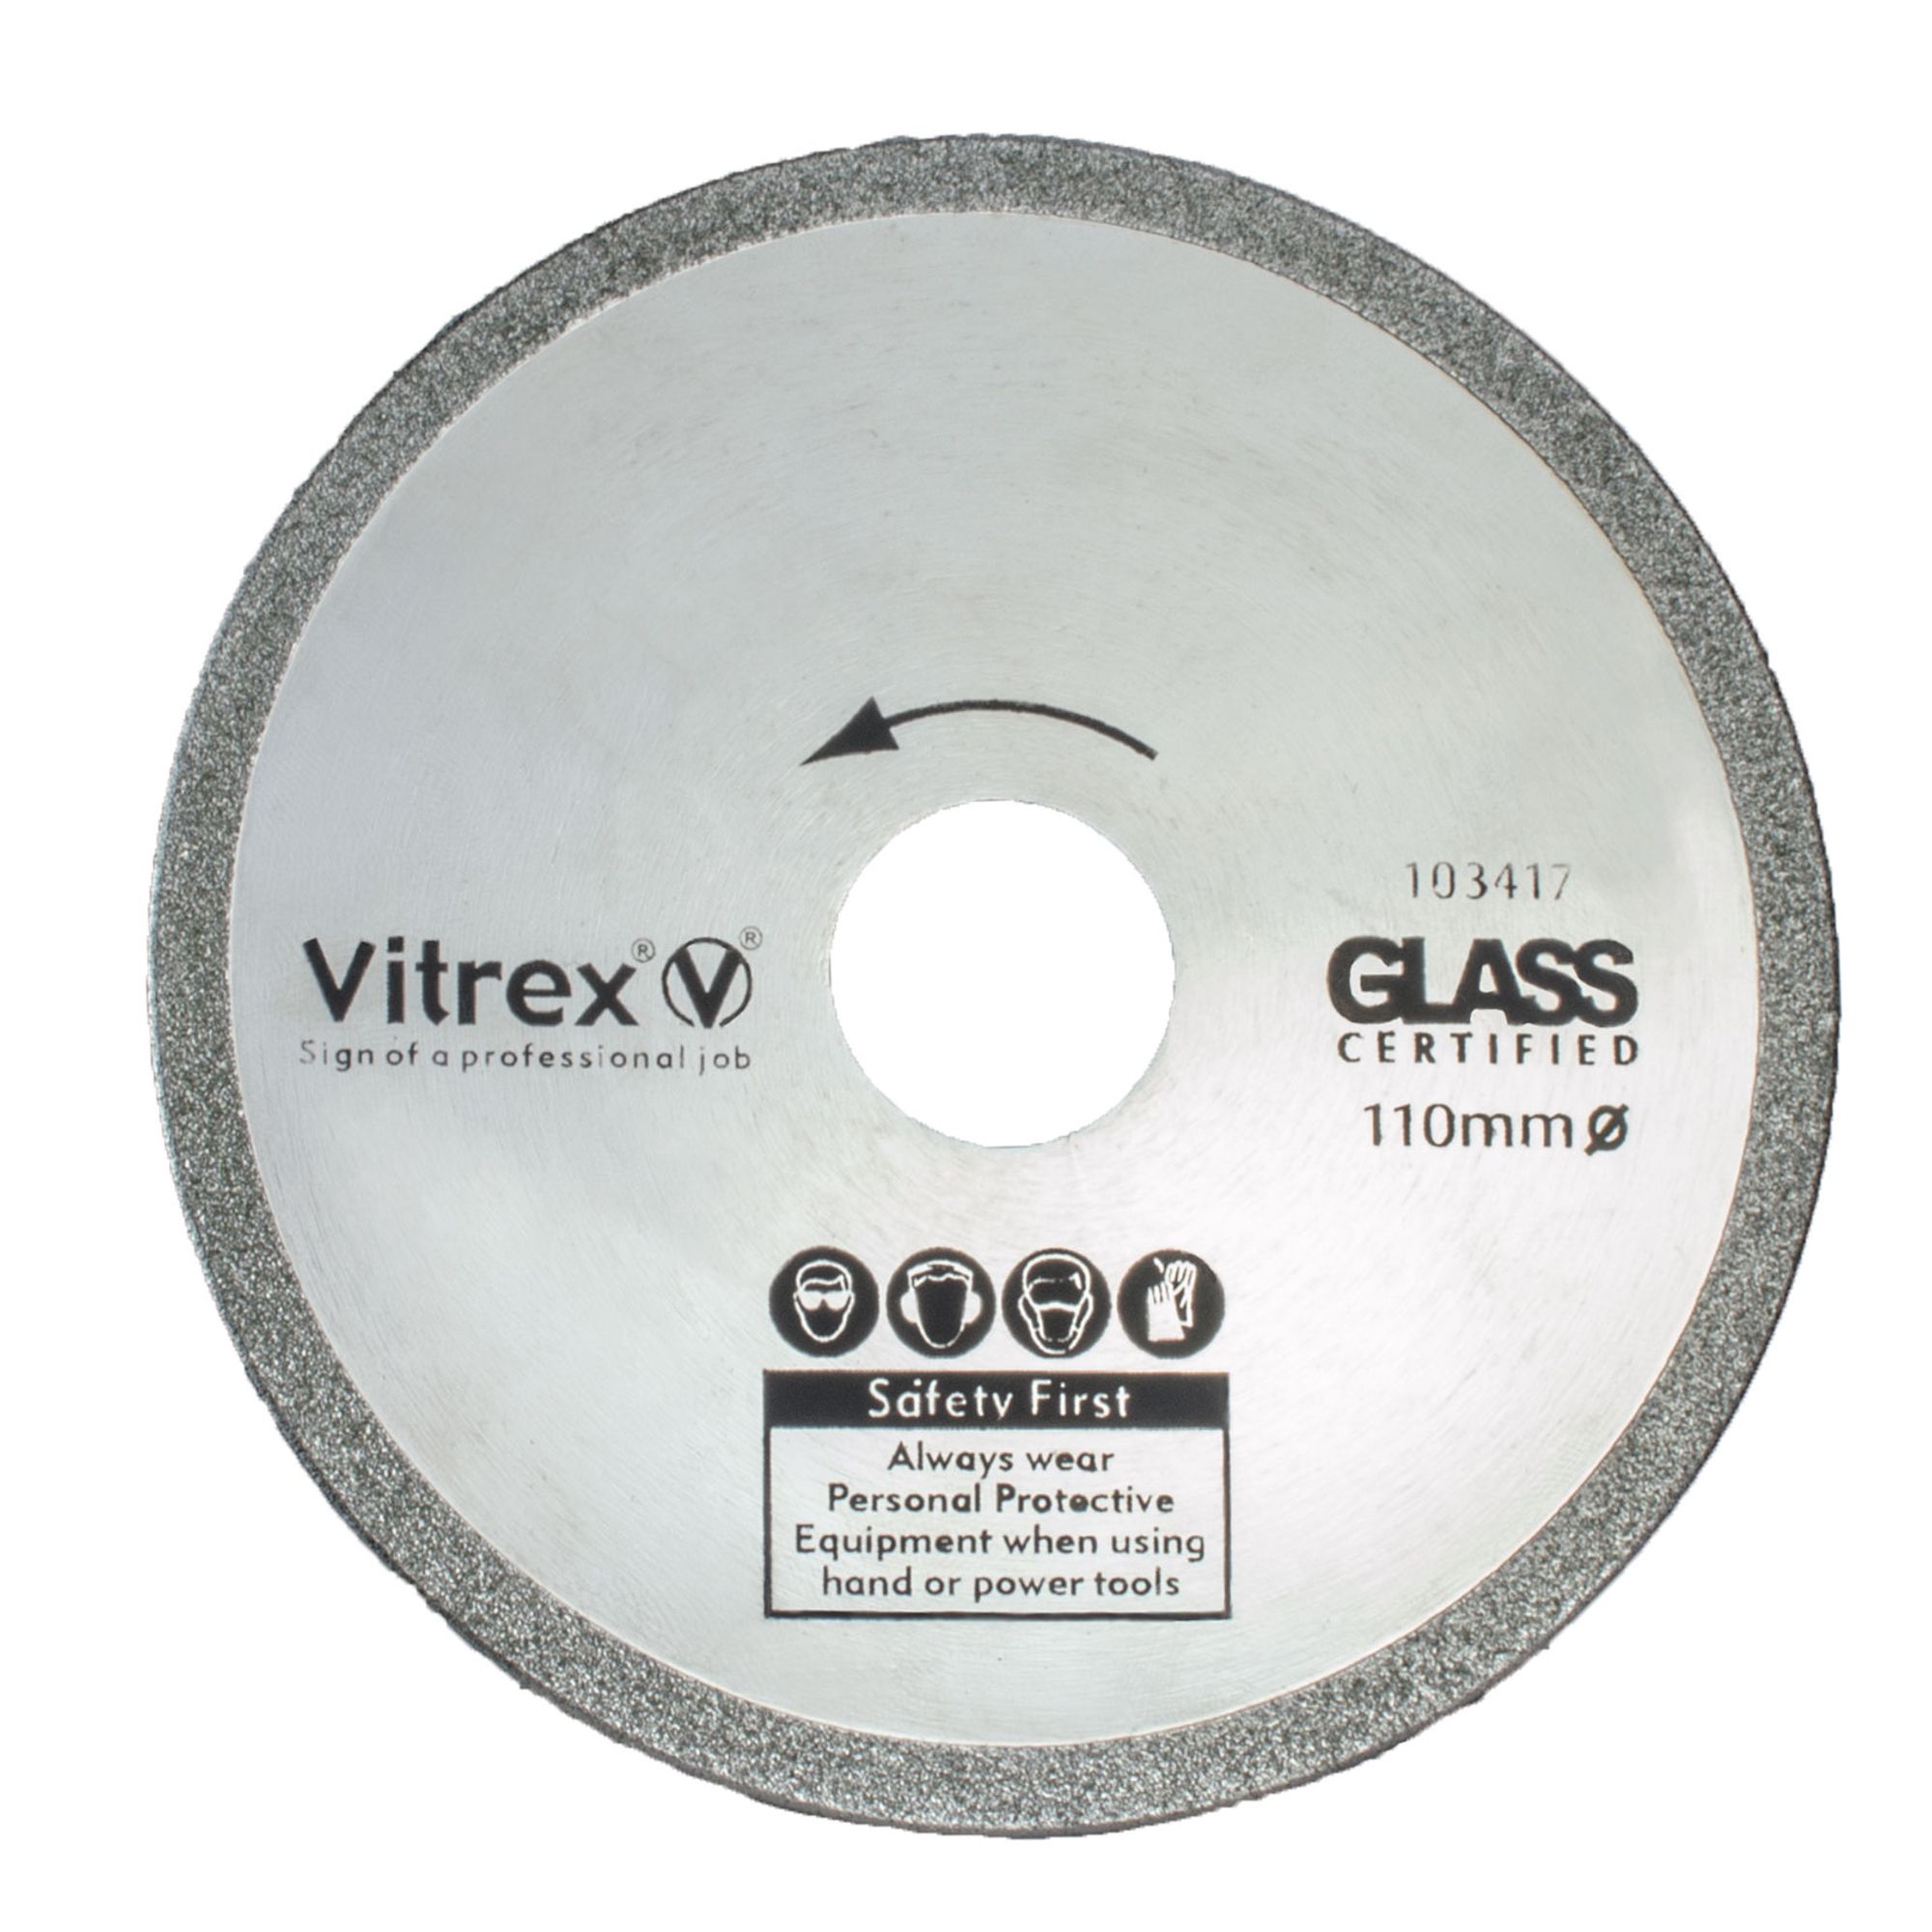 Vitrex Glass cutter